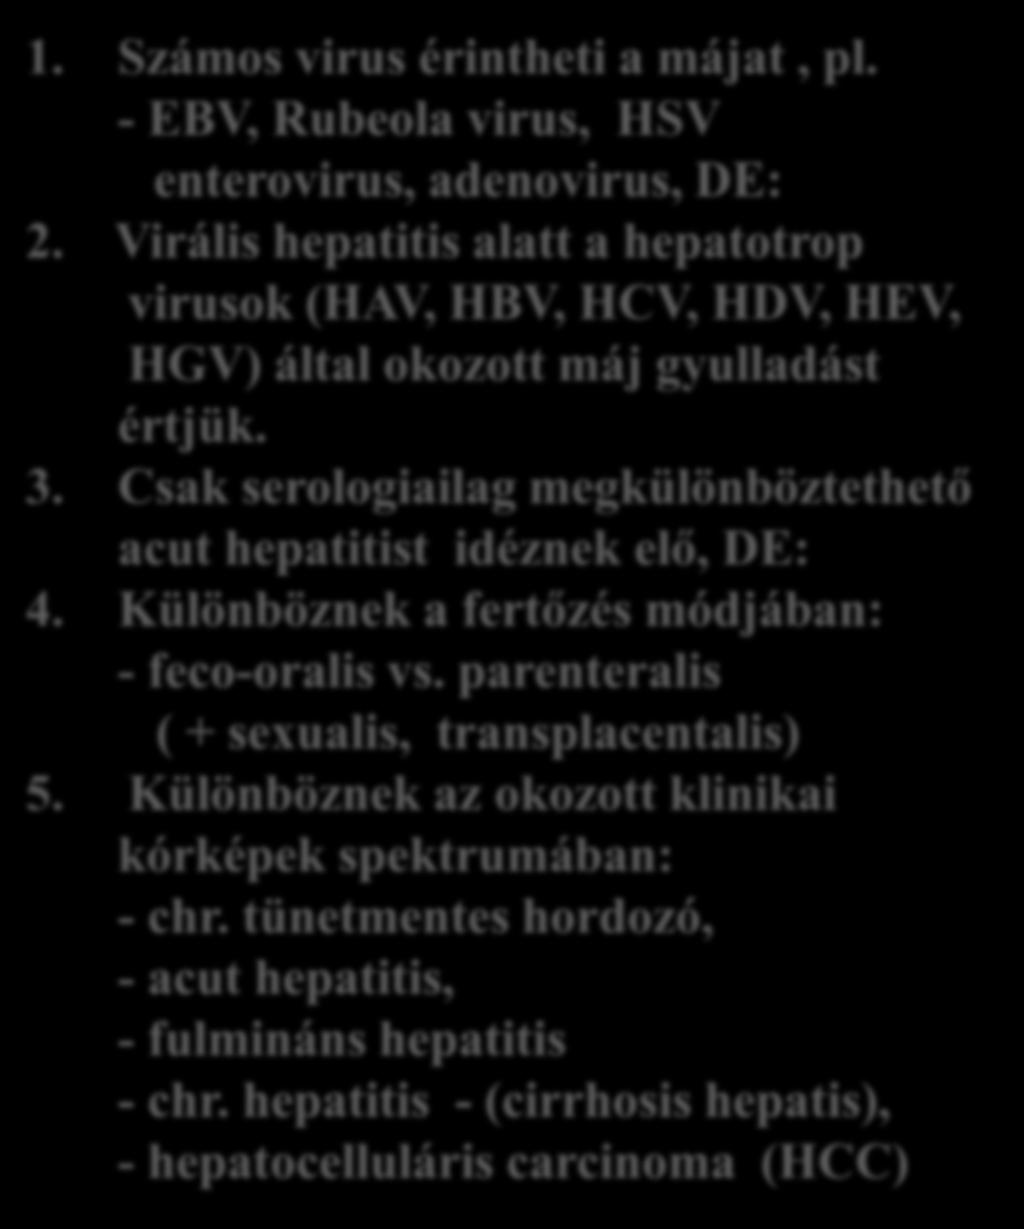 Virus hepatitis 1. Számos virus érintheti a májat, pl. - EBV, Rubeola virus, HSV enterovirus, adenovirus, DE: 2.